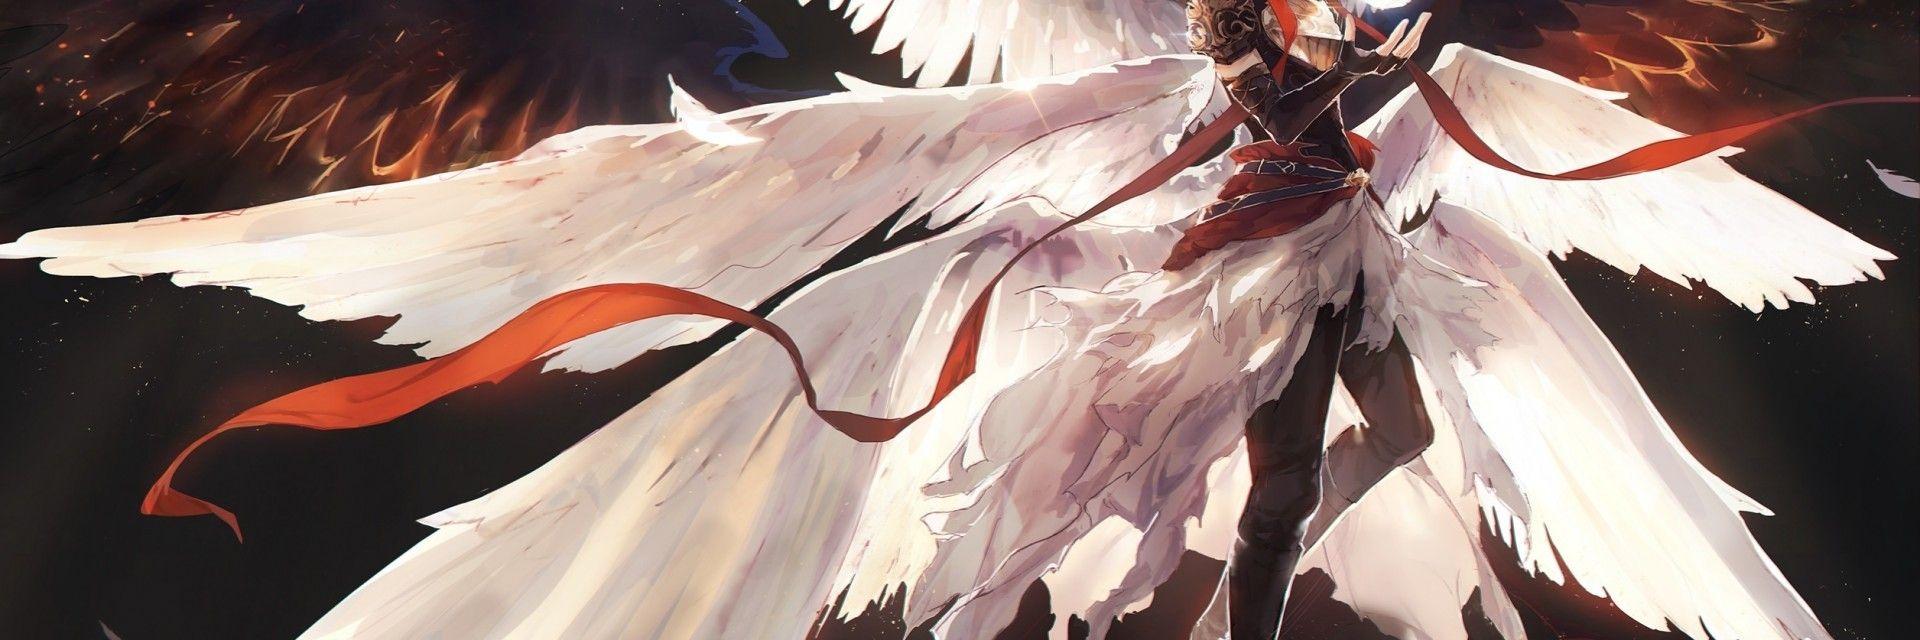 Lucifer Devil Wings Wallpapers - Top Free Lucifer Devil Wings ...